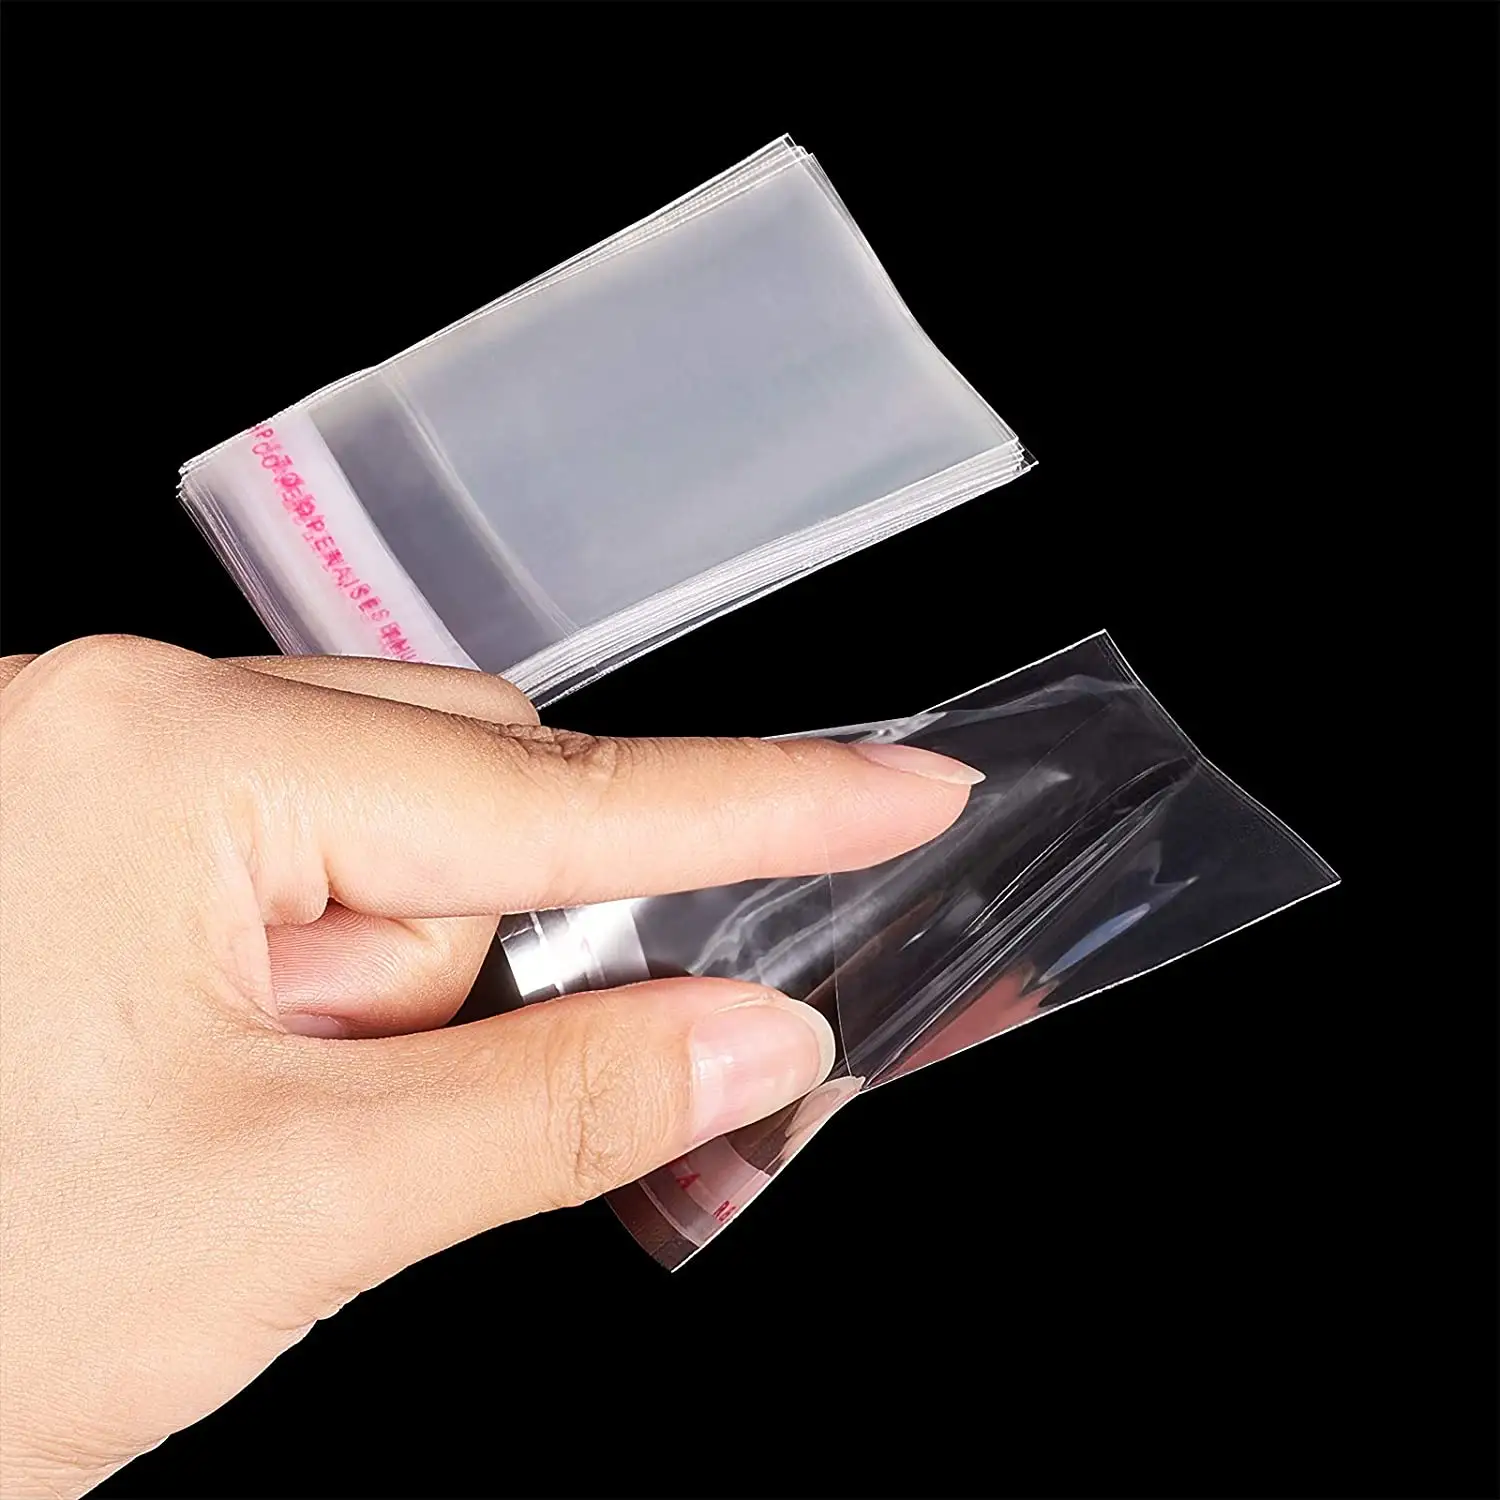 Bolsas pequeñas de plástico transparente OPP resellables, bolsas de chelo autoadhesivas para cosas pequeñas